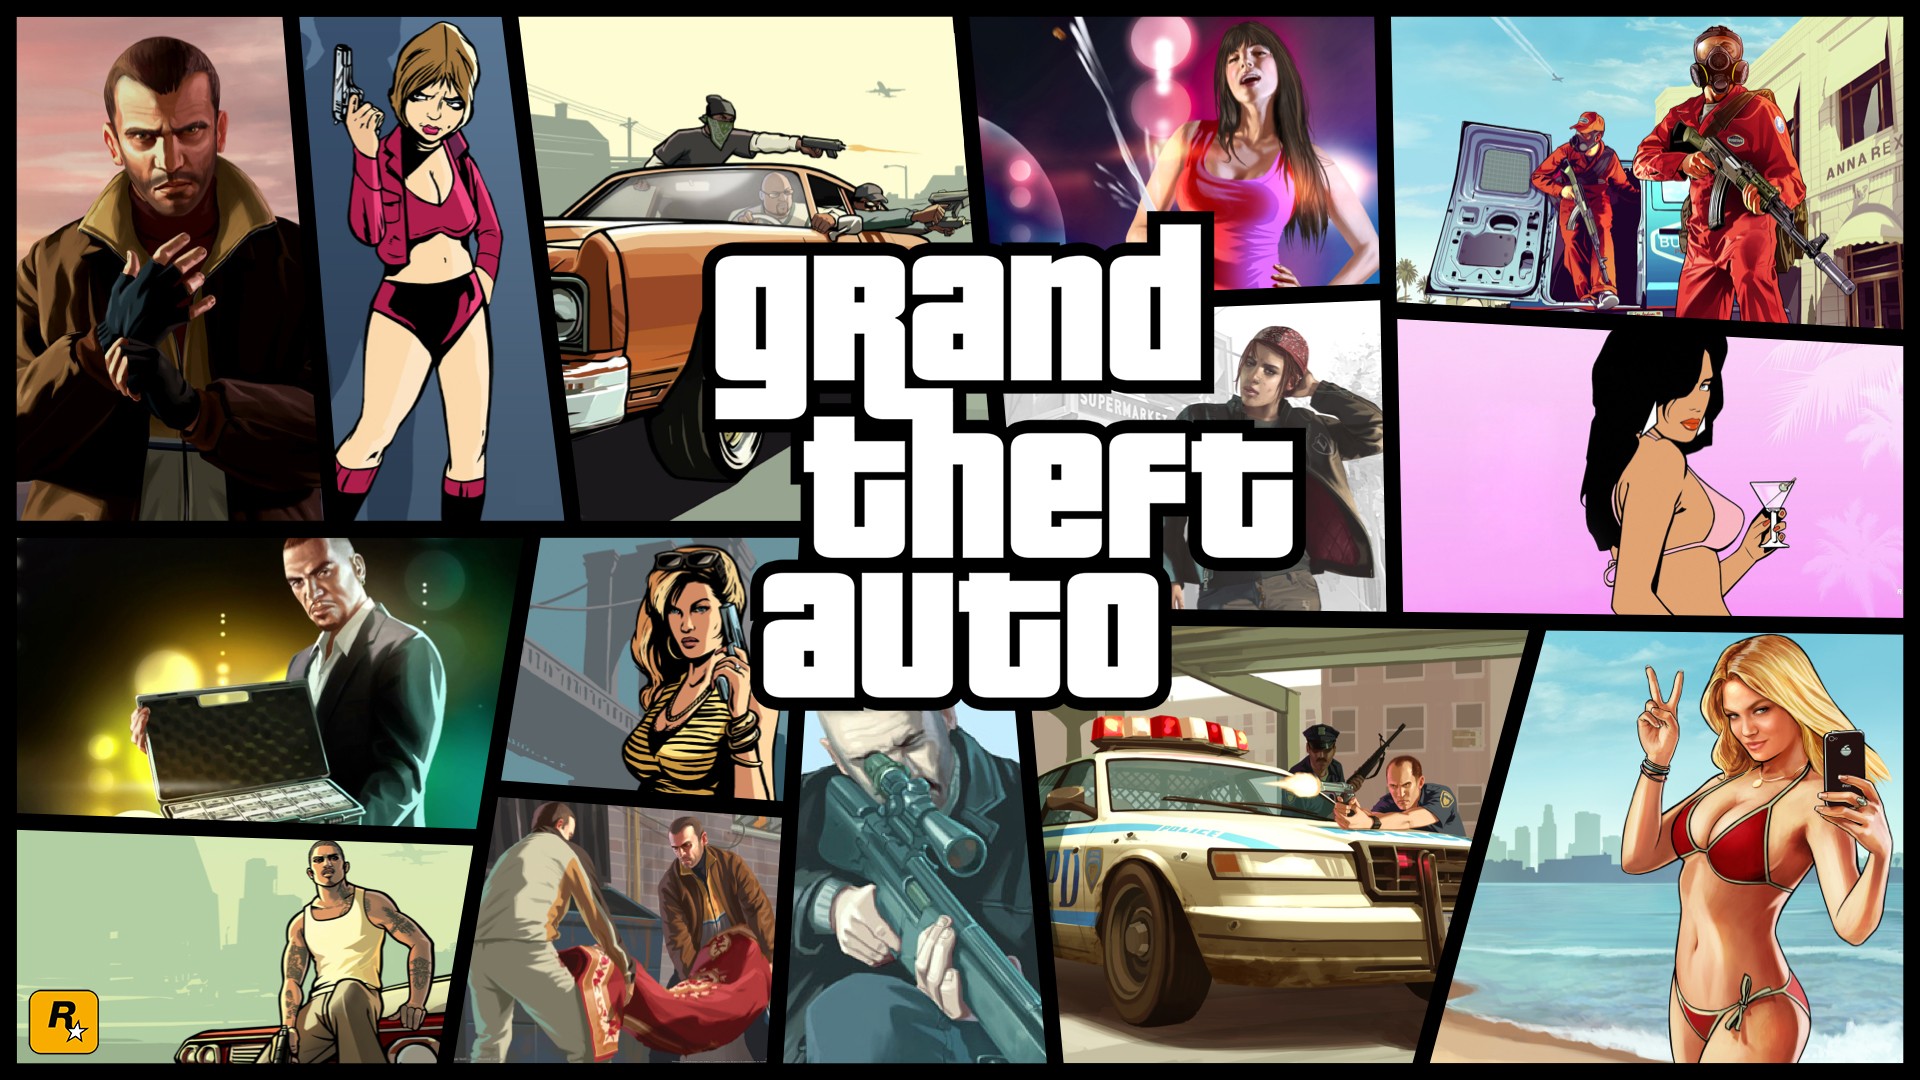 Grand Theft Auto Series wallpaper   ForWallpapercom